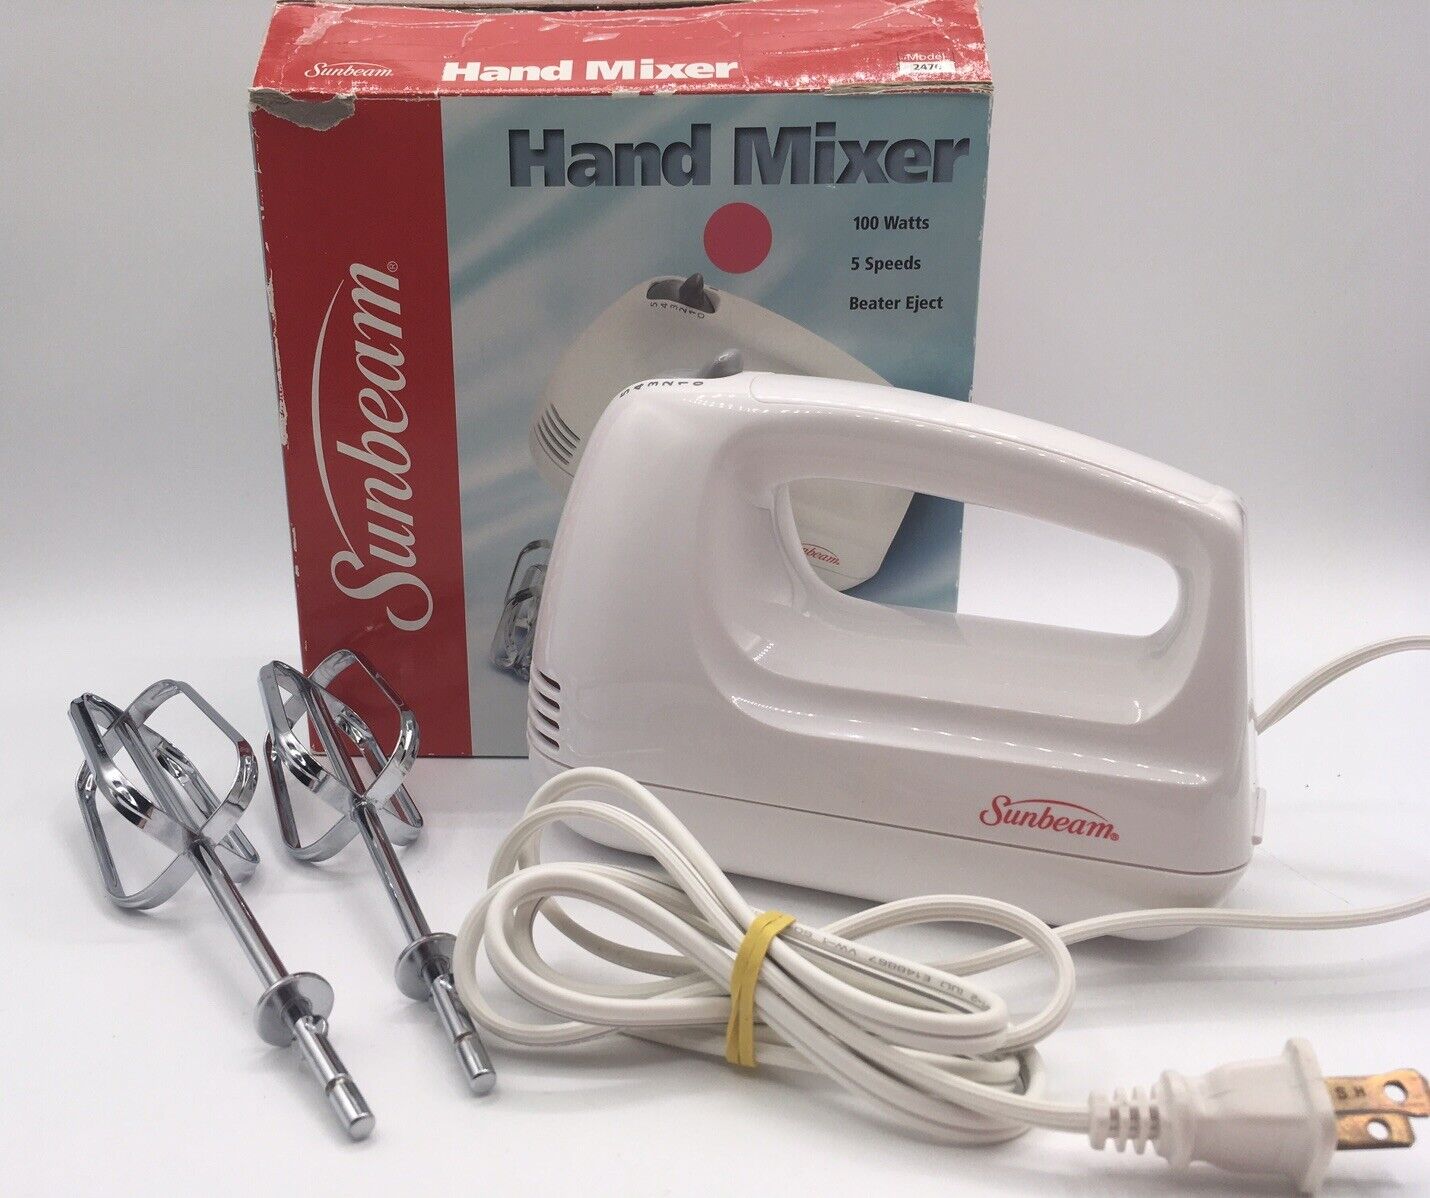 Vintage 2001 Sunbeam Handheld Electric Corded Mixer Blender Model 2470. In box